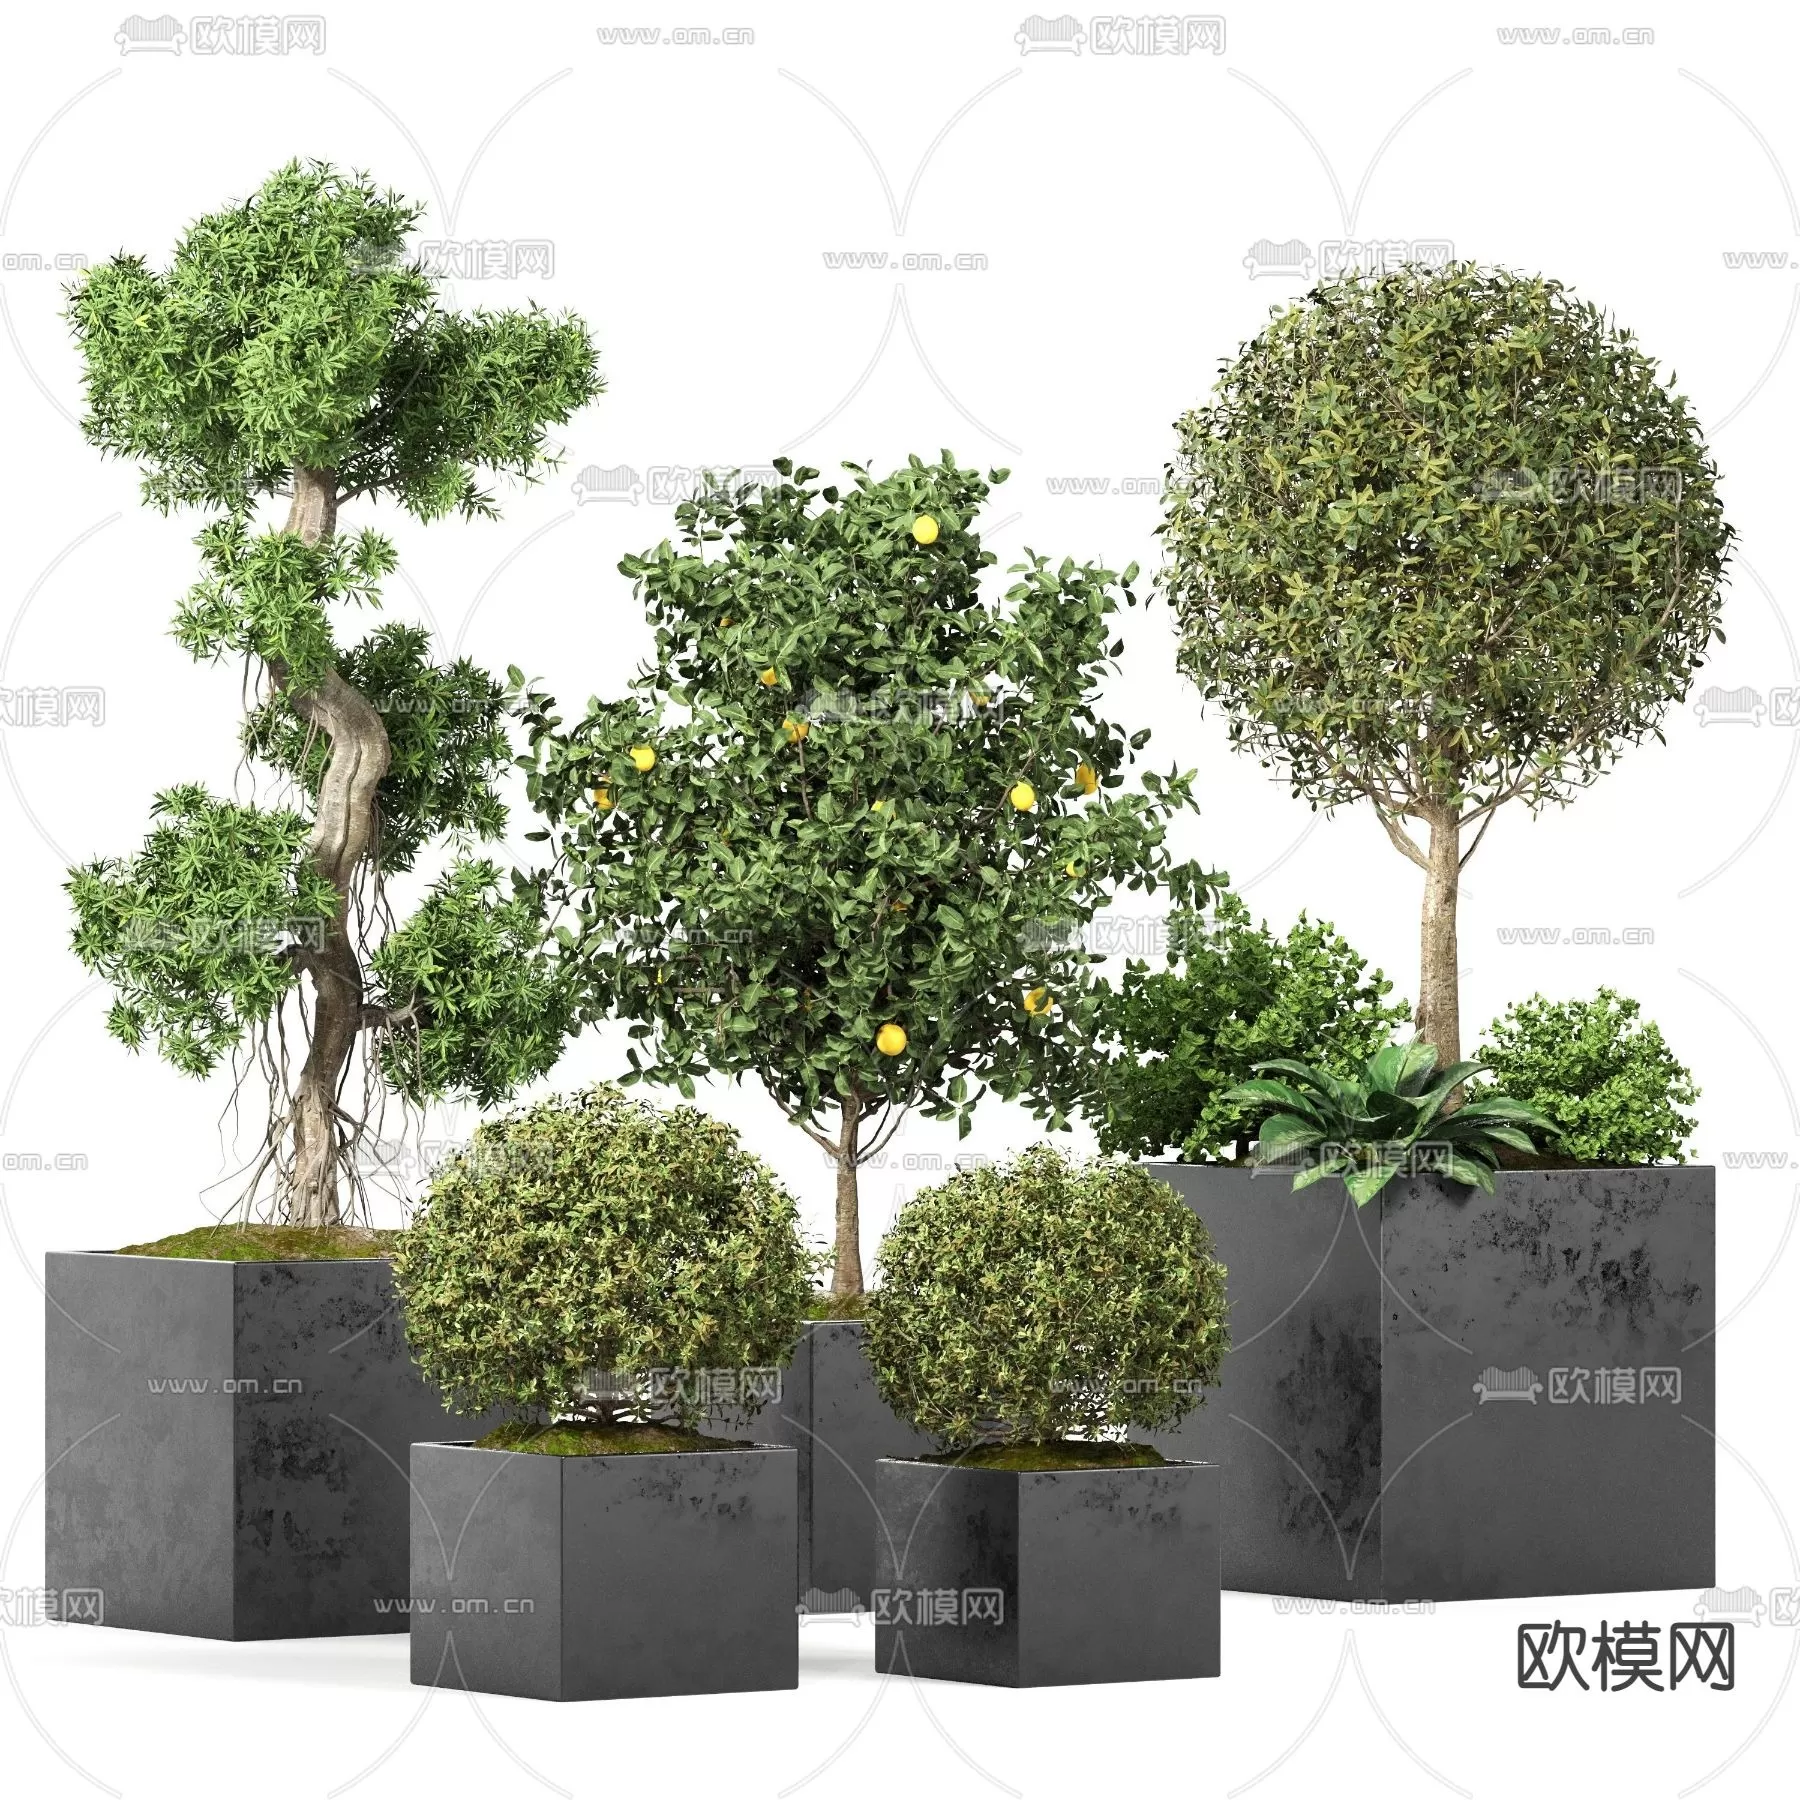 TREE – PLANTS – 3DS MAX MODELS – 137 – PRO